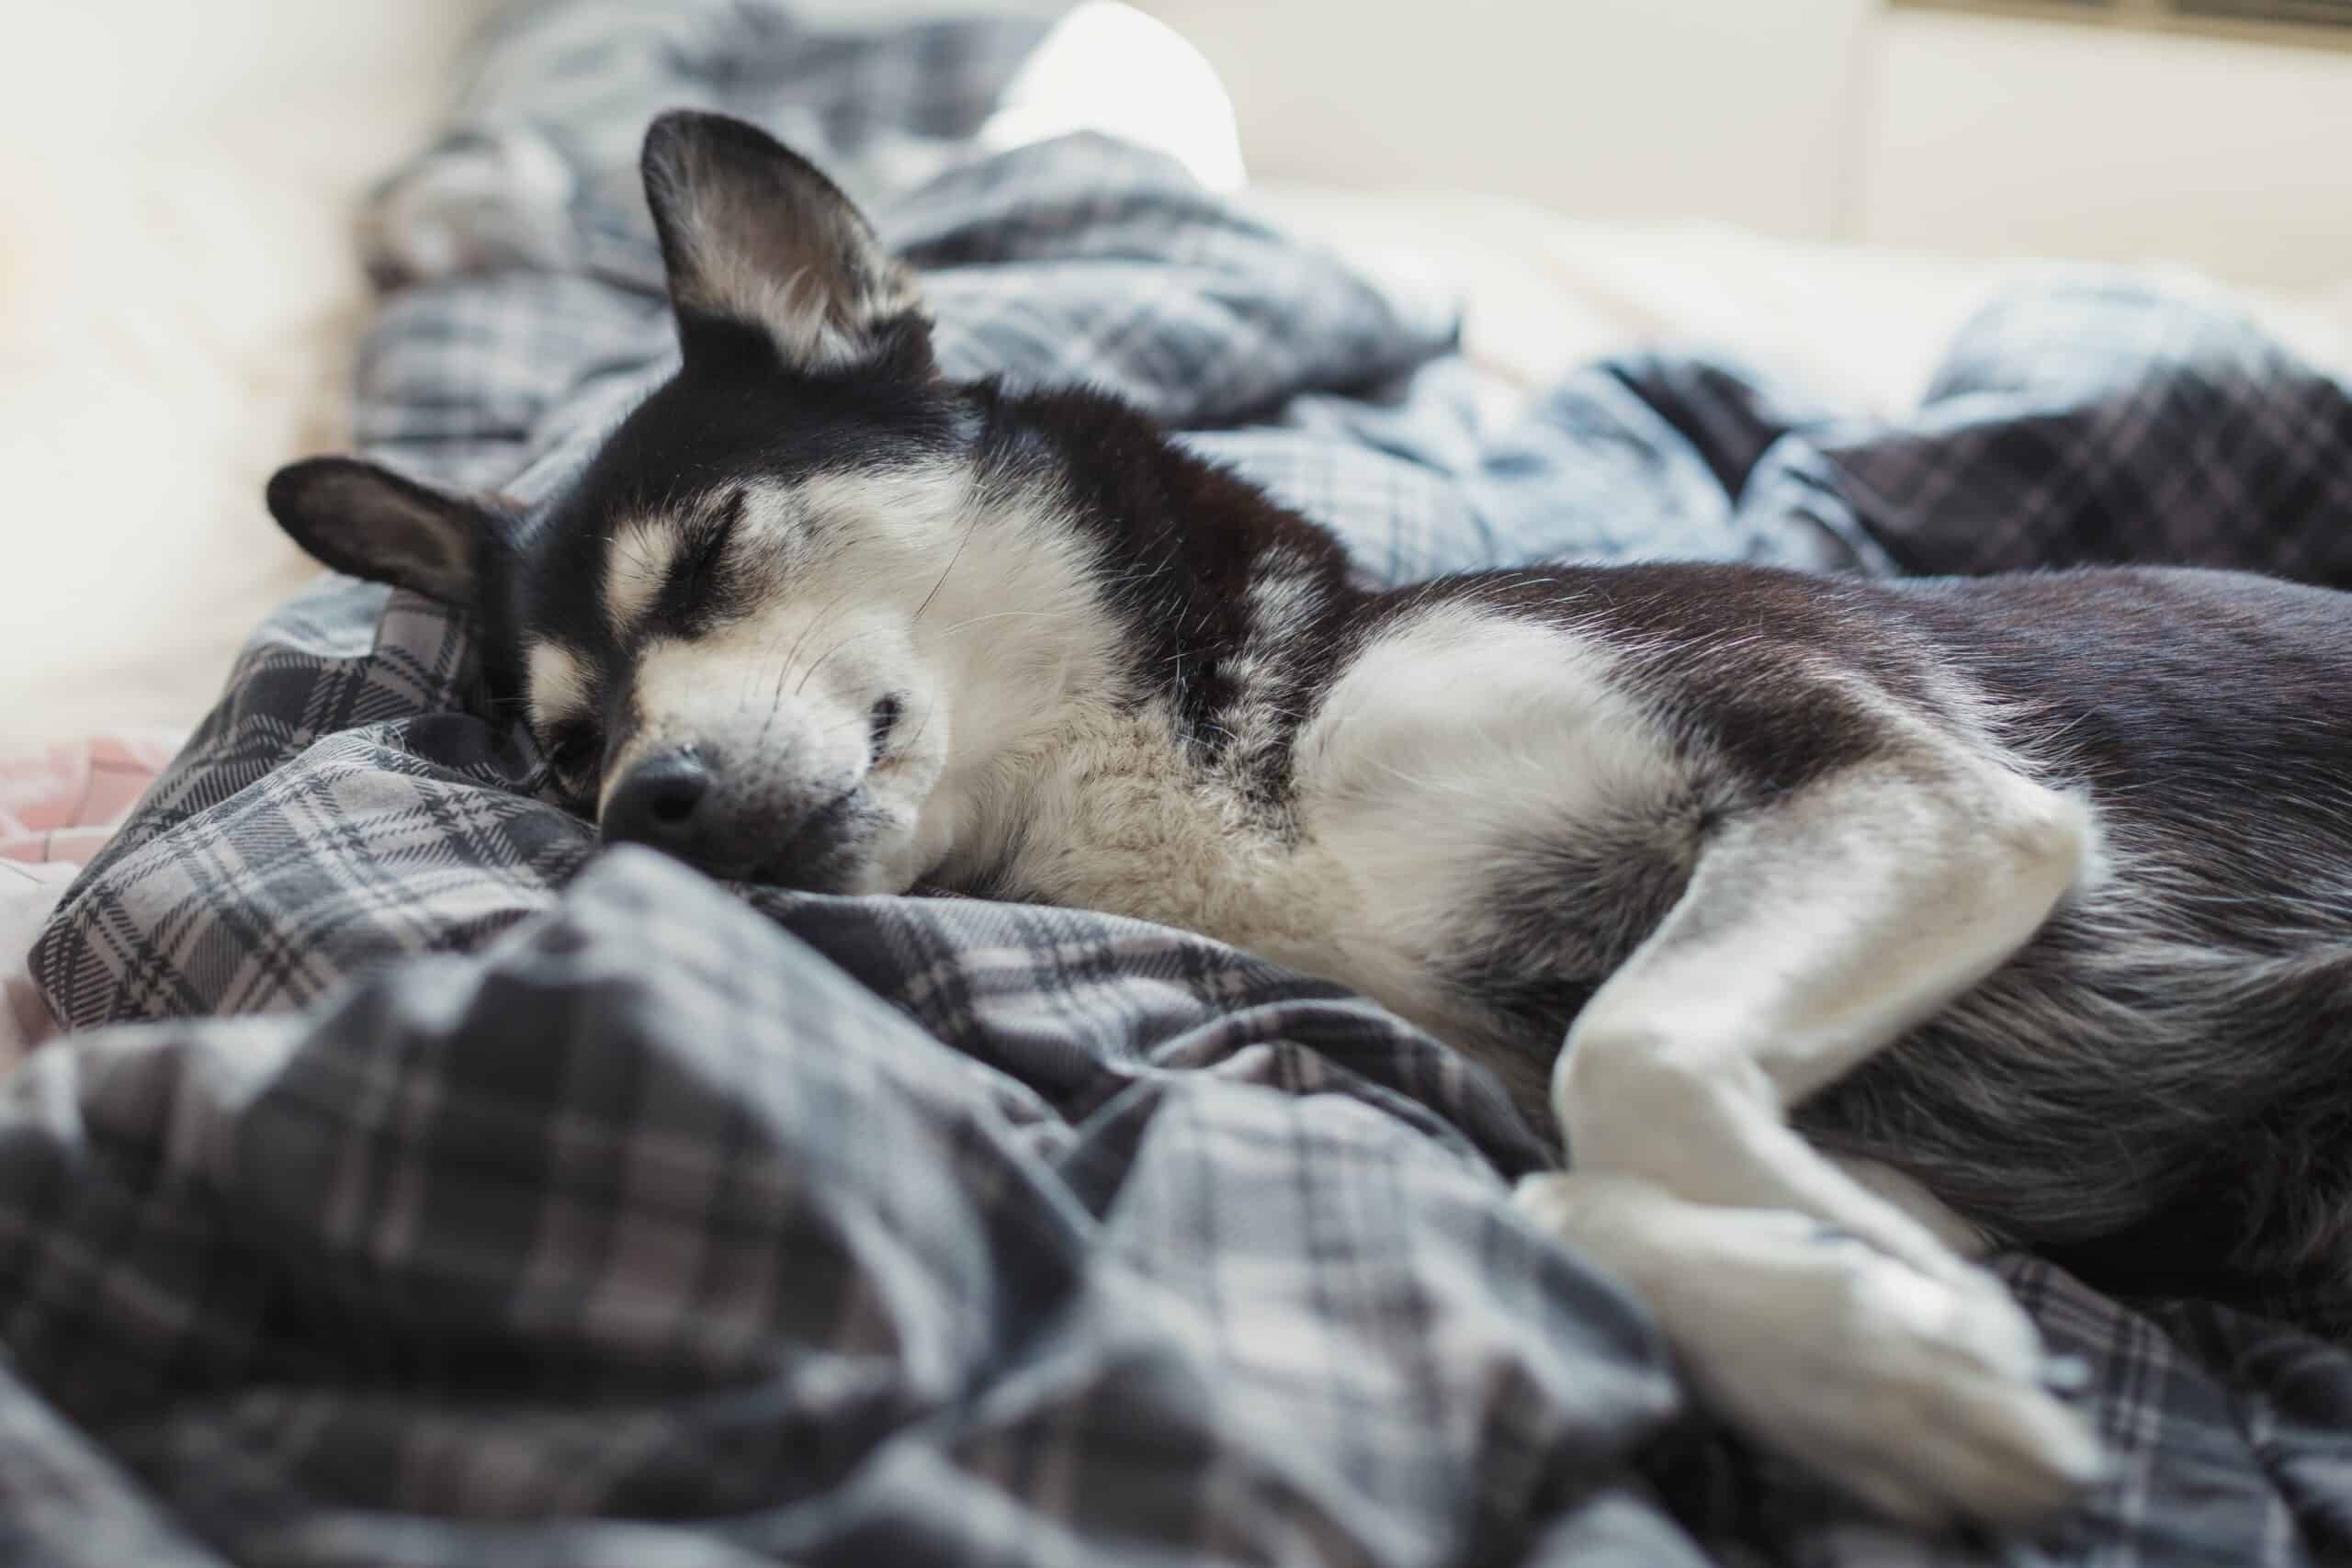 Do all huskies sleep a lot?